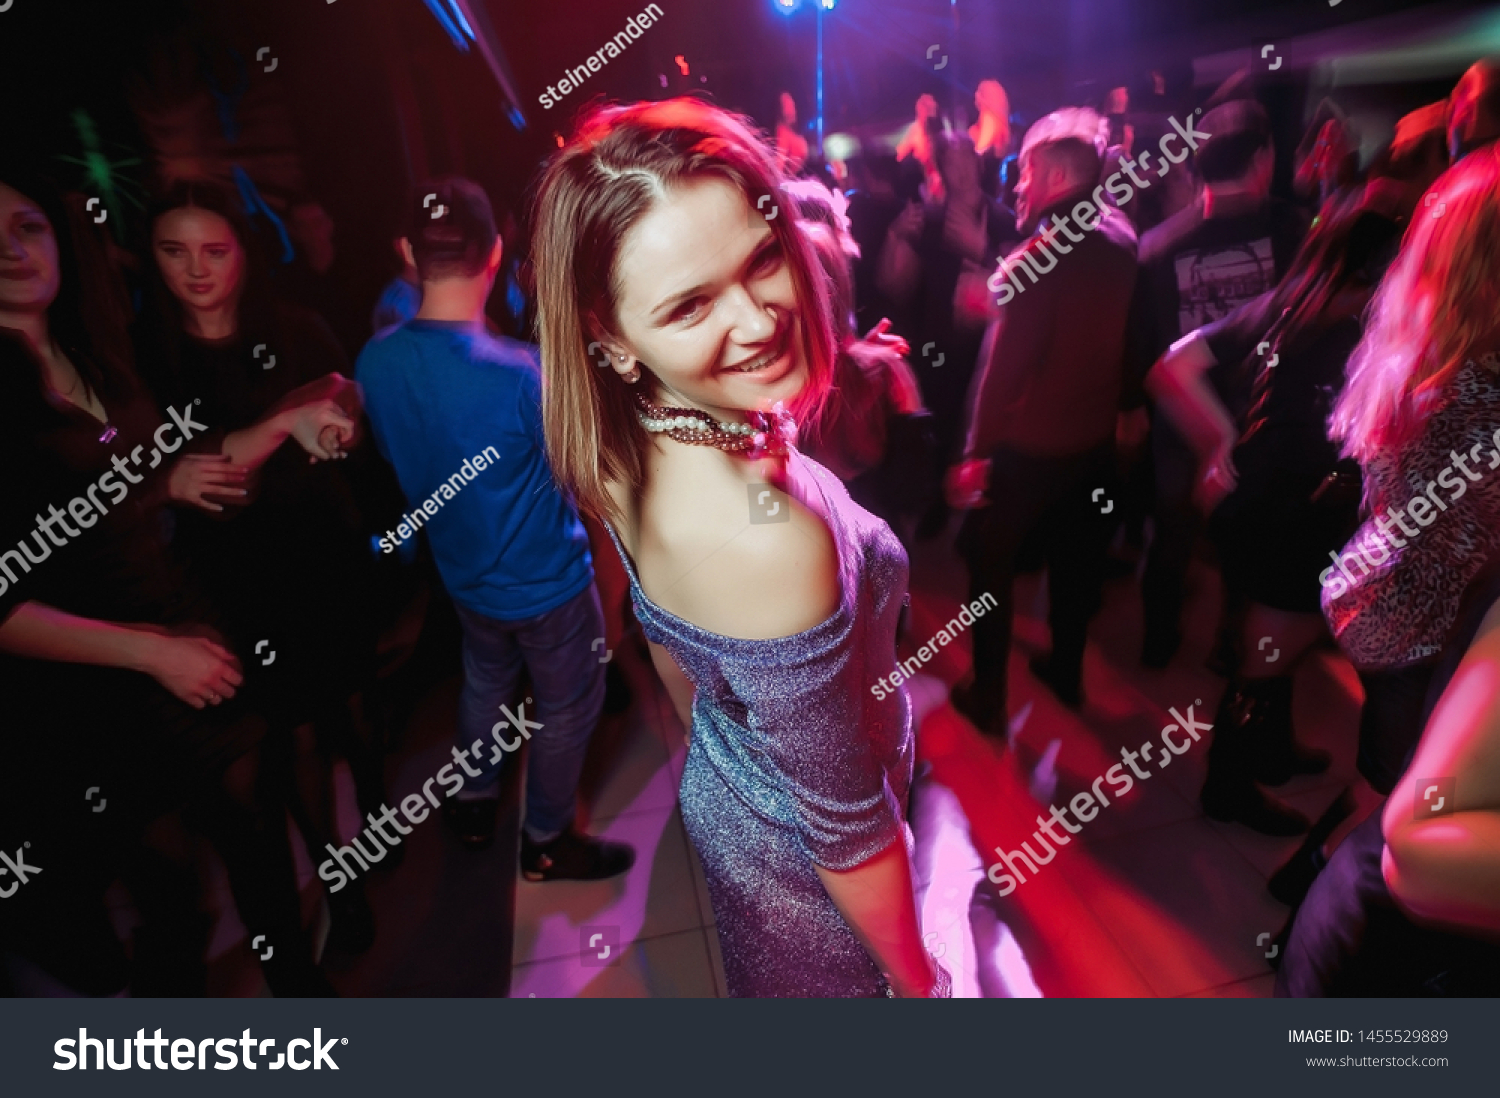 Ukraine night club